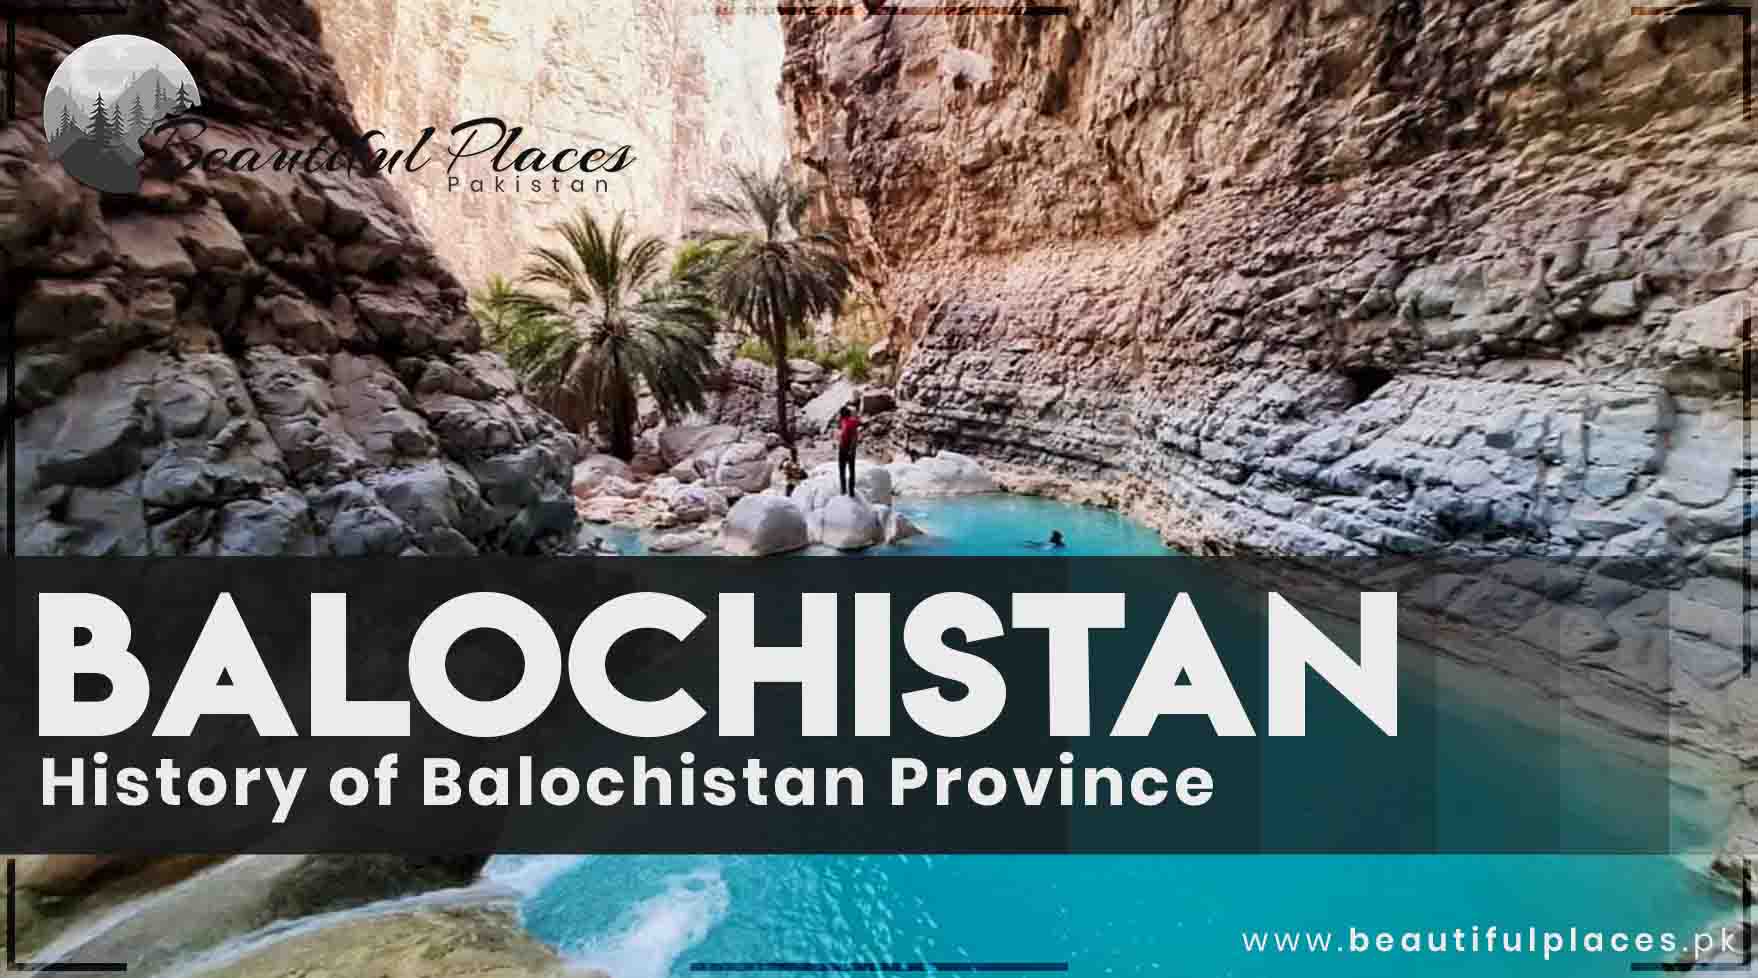 About Balochistan | History of Balochistan Province